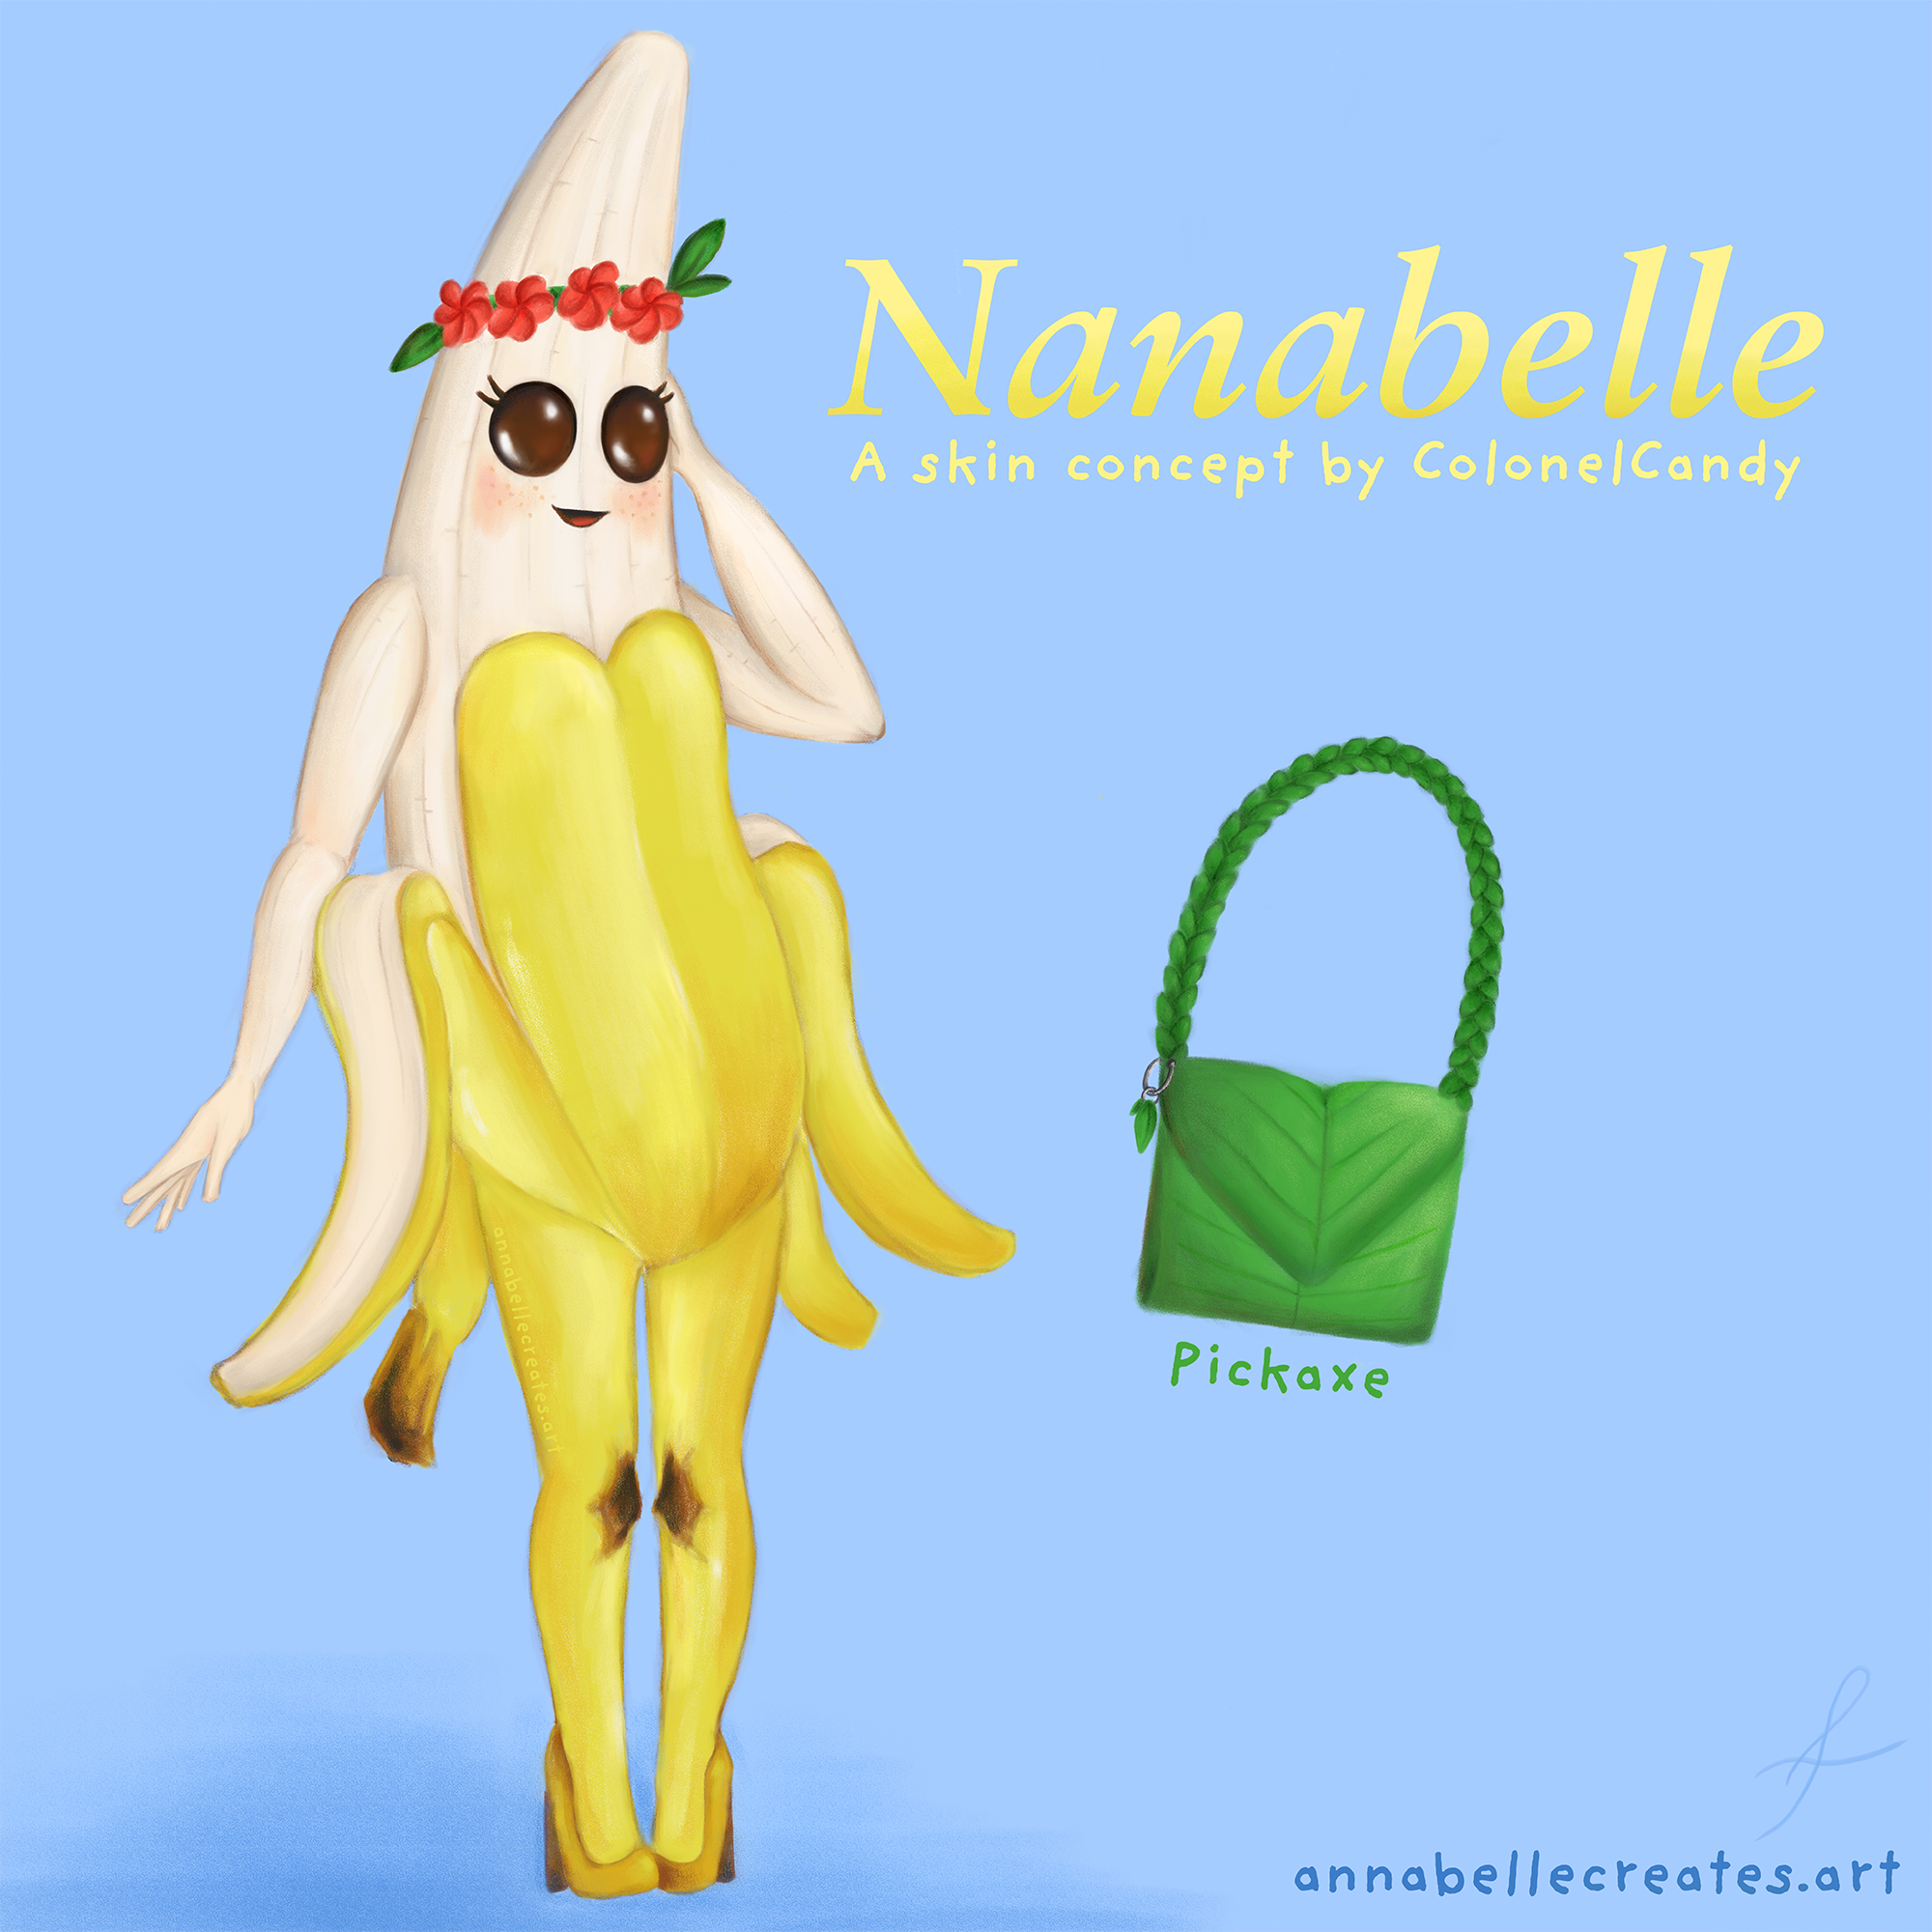 Nanabelle